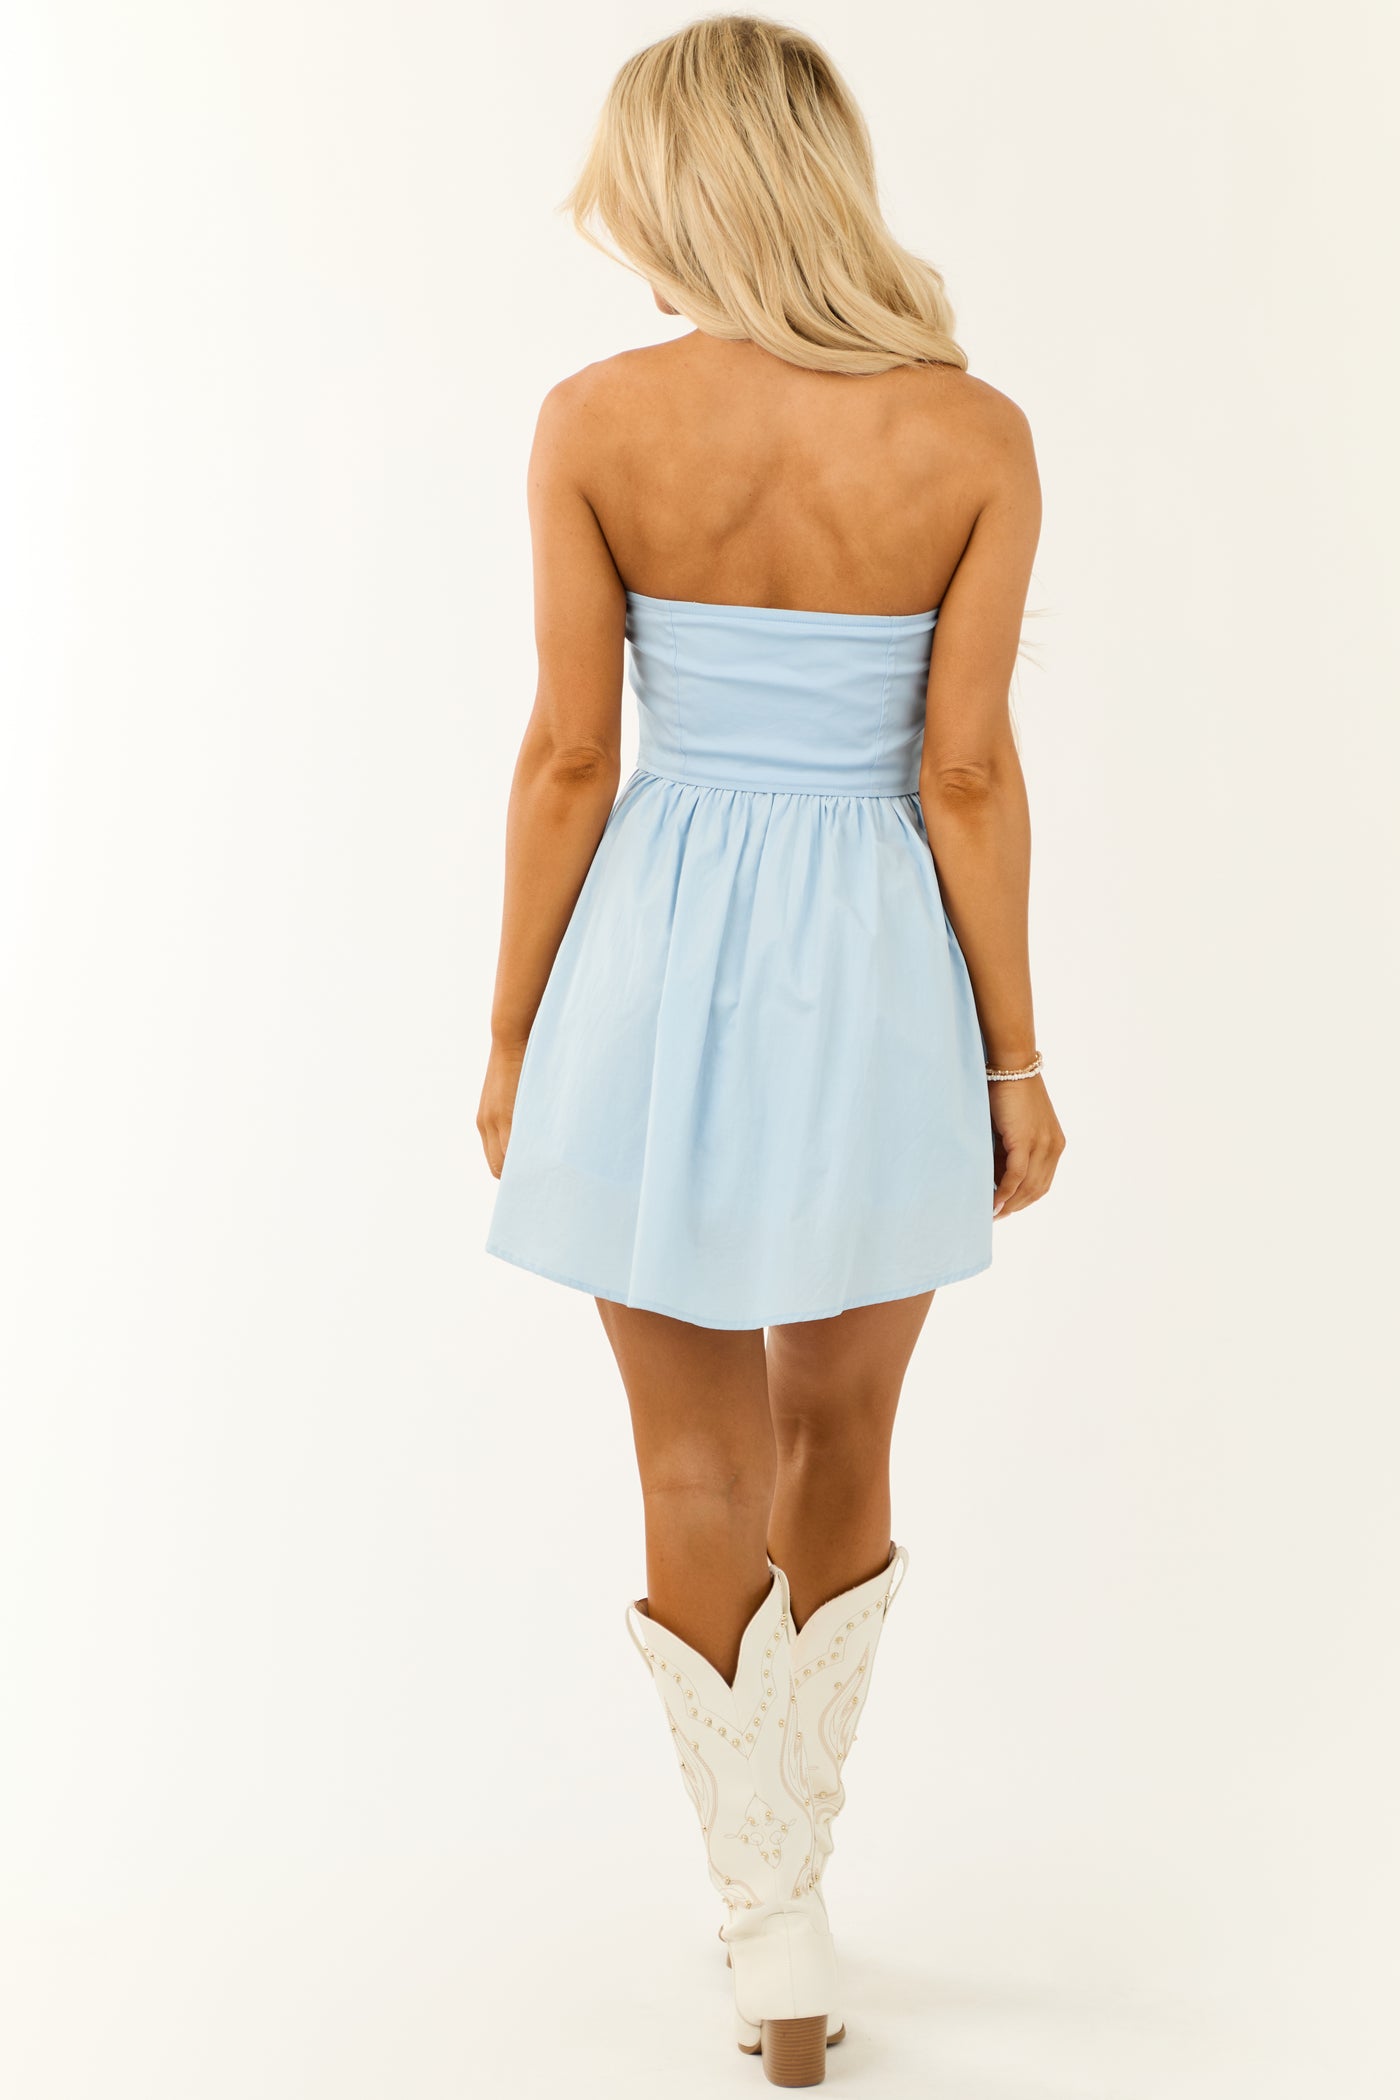 Sky Blue Strapless Corset Babydoll Mini Dress